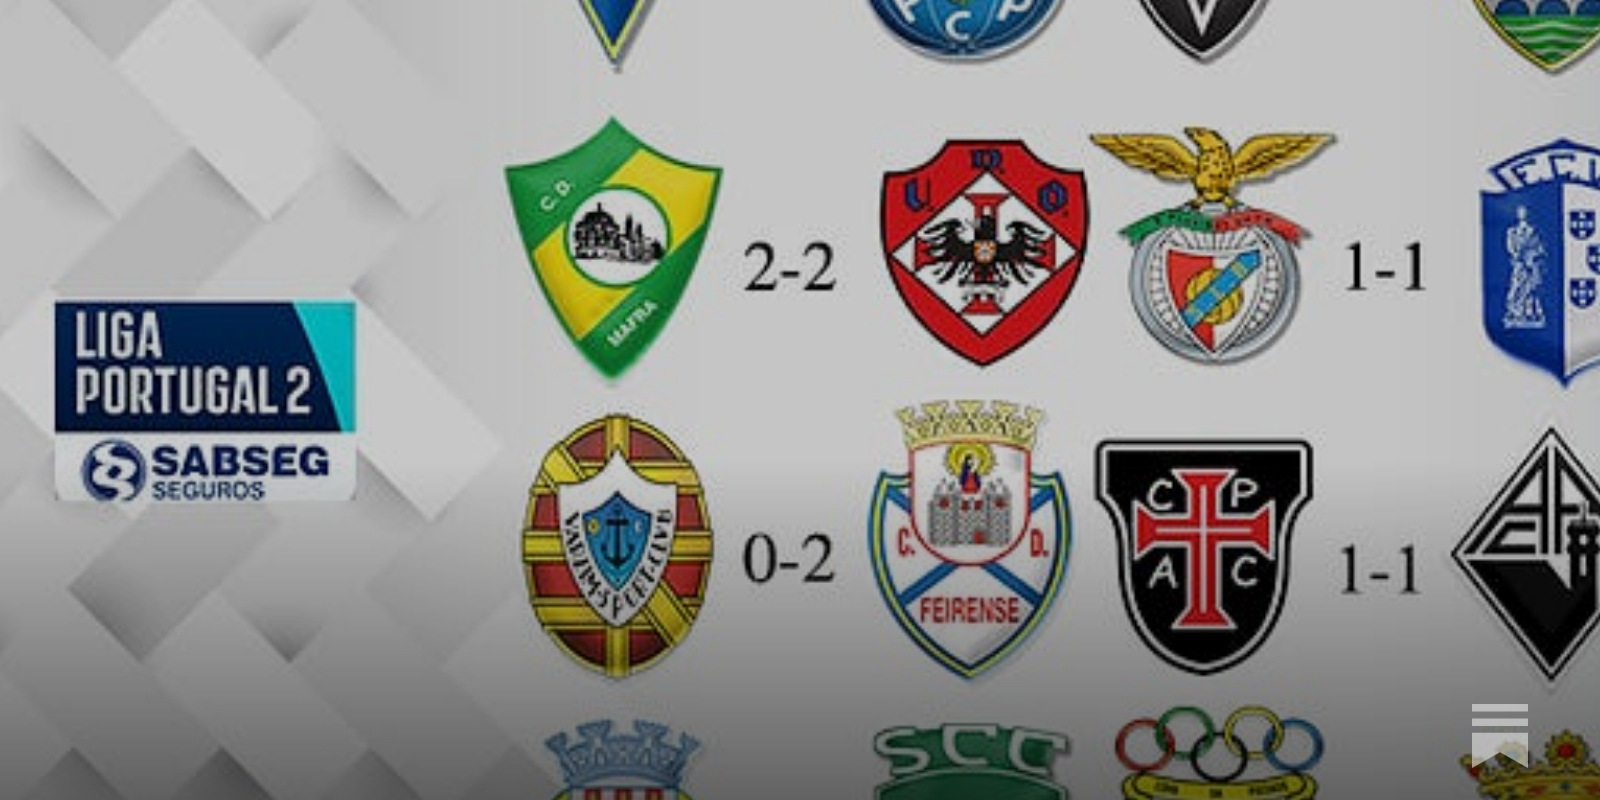 This Week In Liga Portugal 2 - by José Almeida